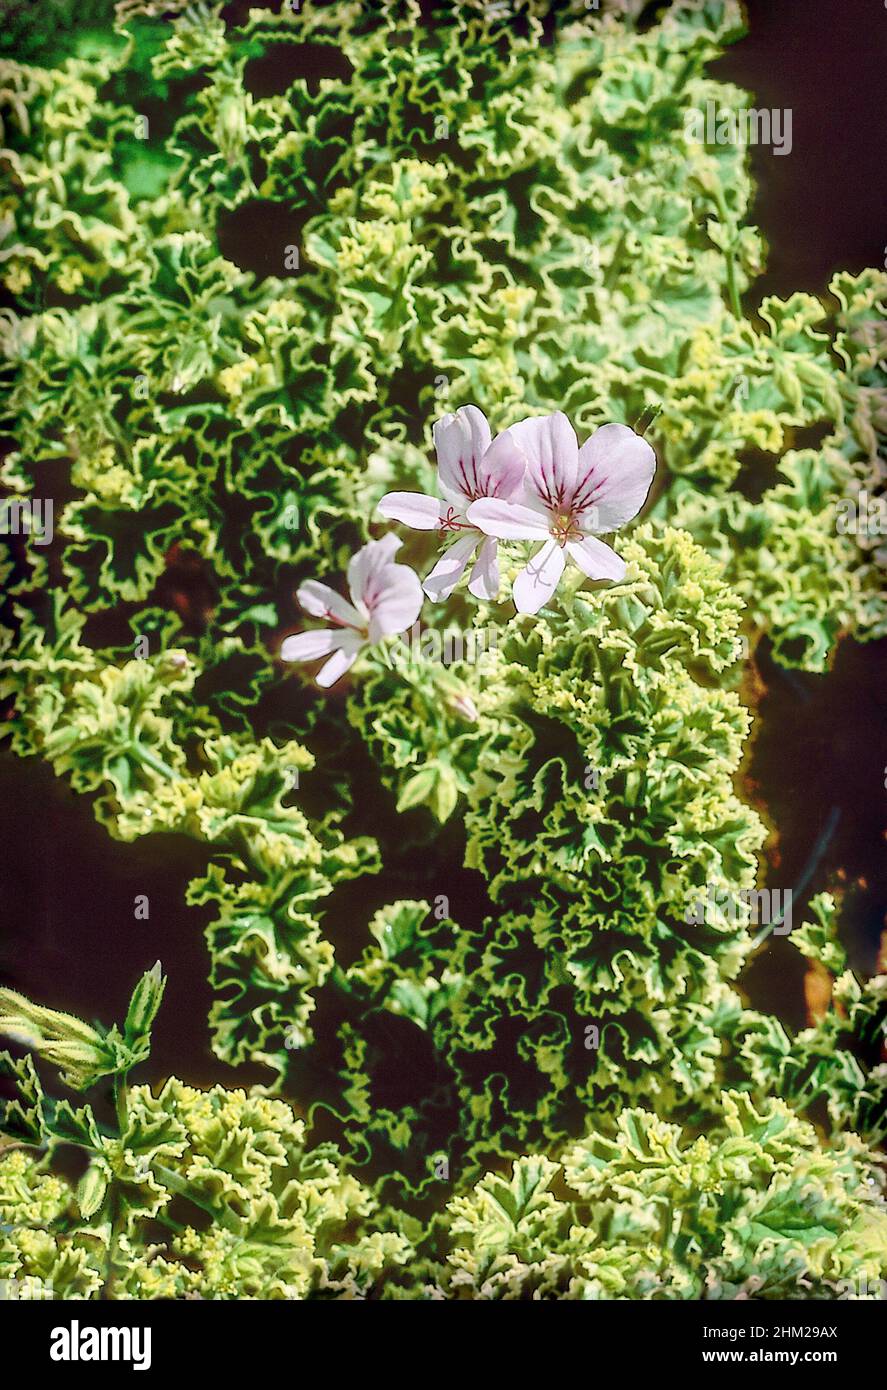 Pelargonium crispum Variegatum con limone profumato verde e crema bordato foglie variegate e rosa a pallido mauve fiori una gelata tenere casa pianta Foto Stock